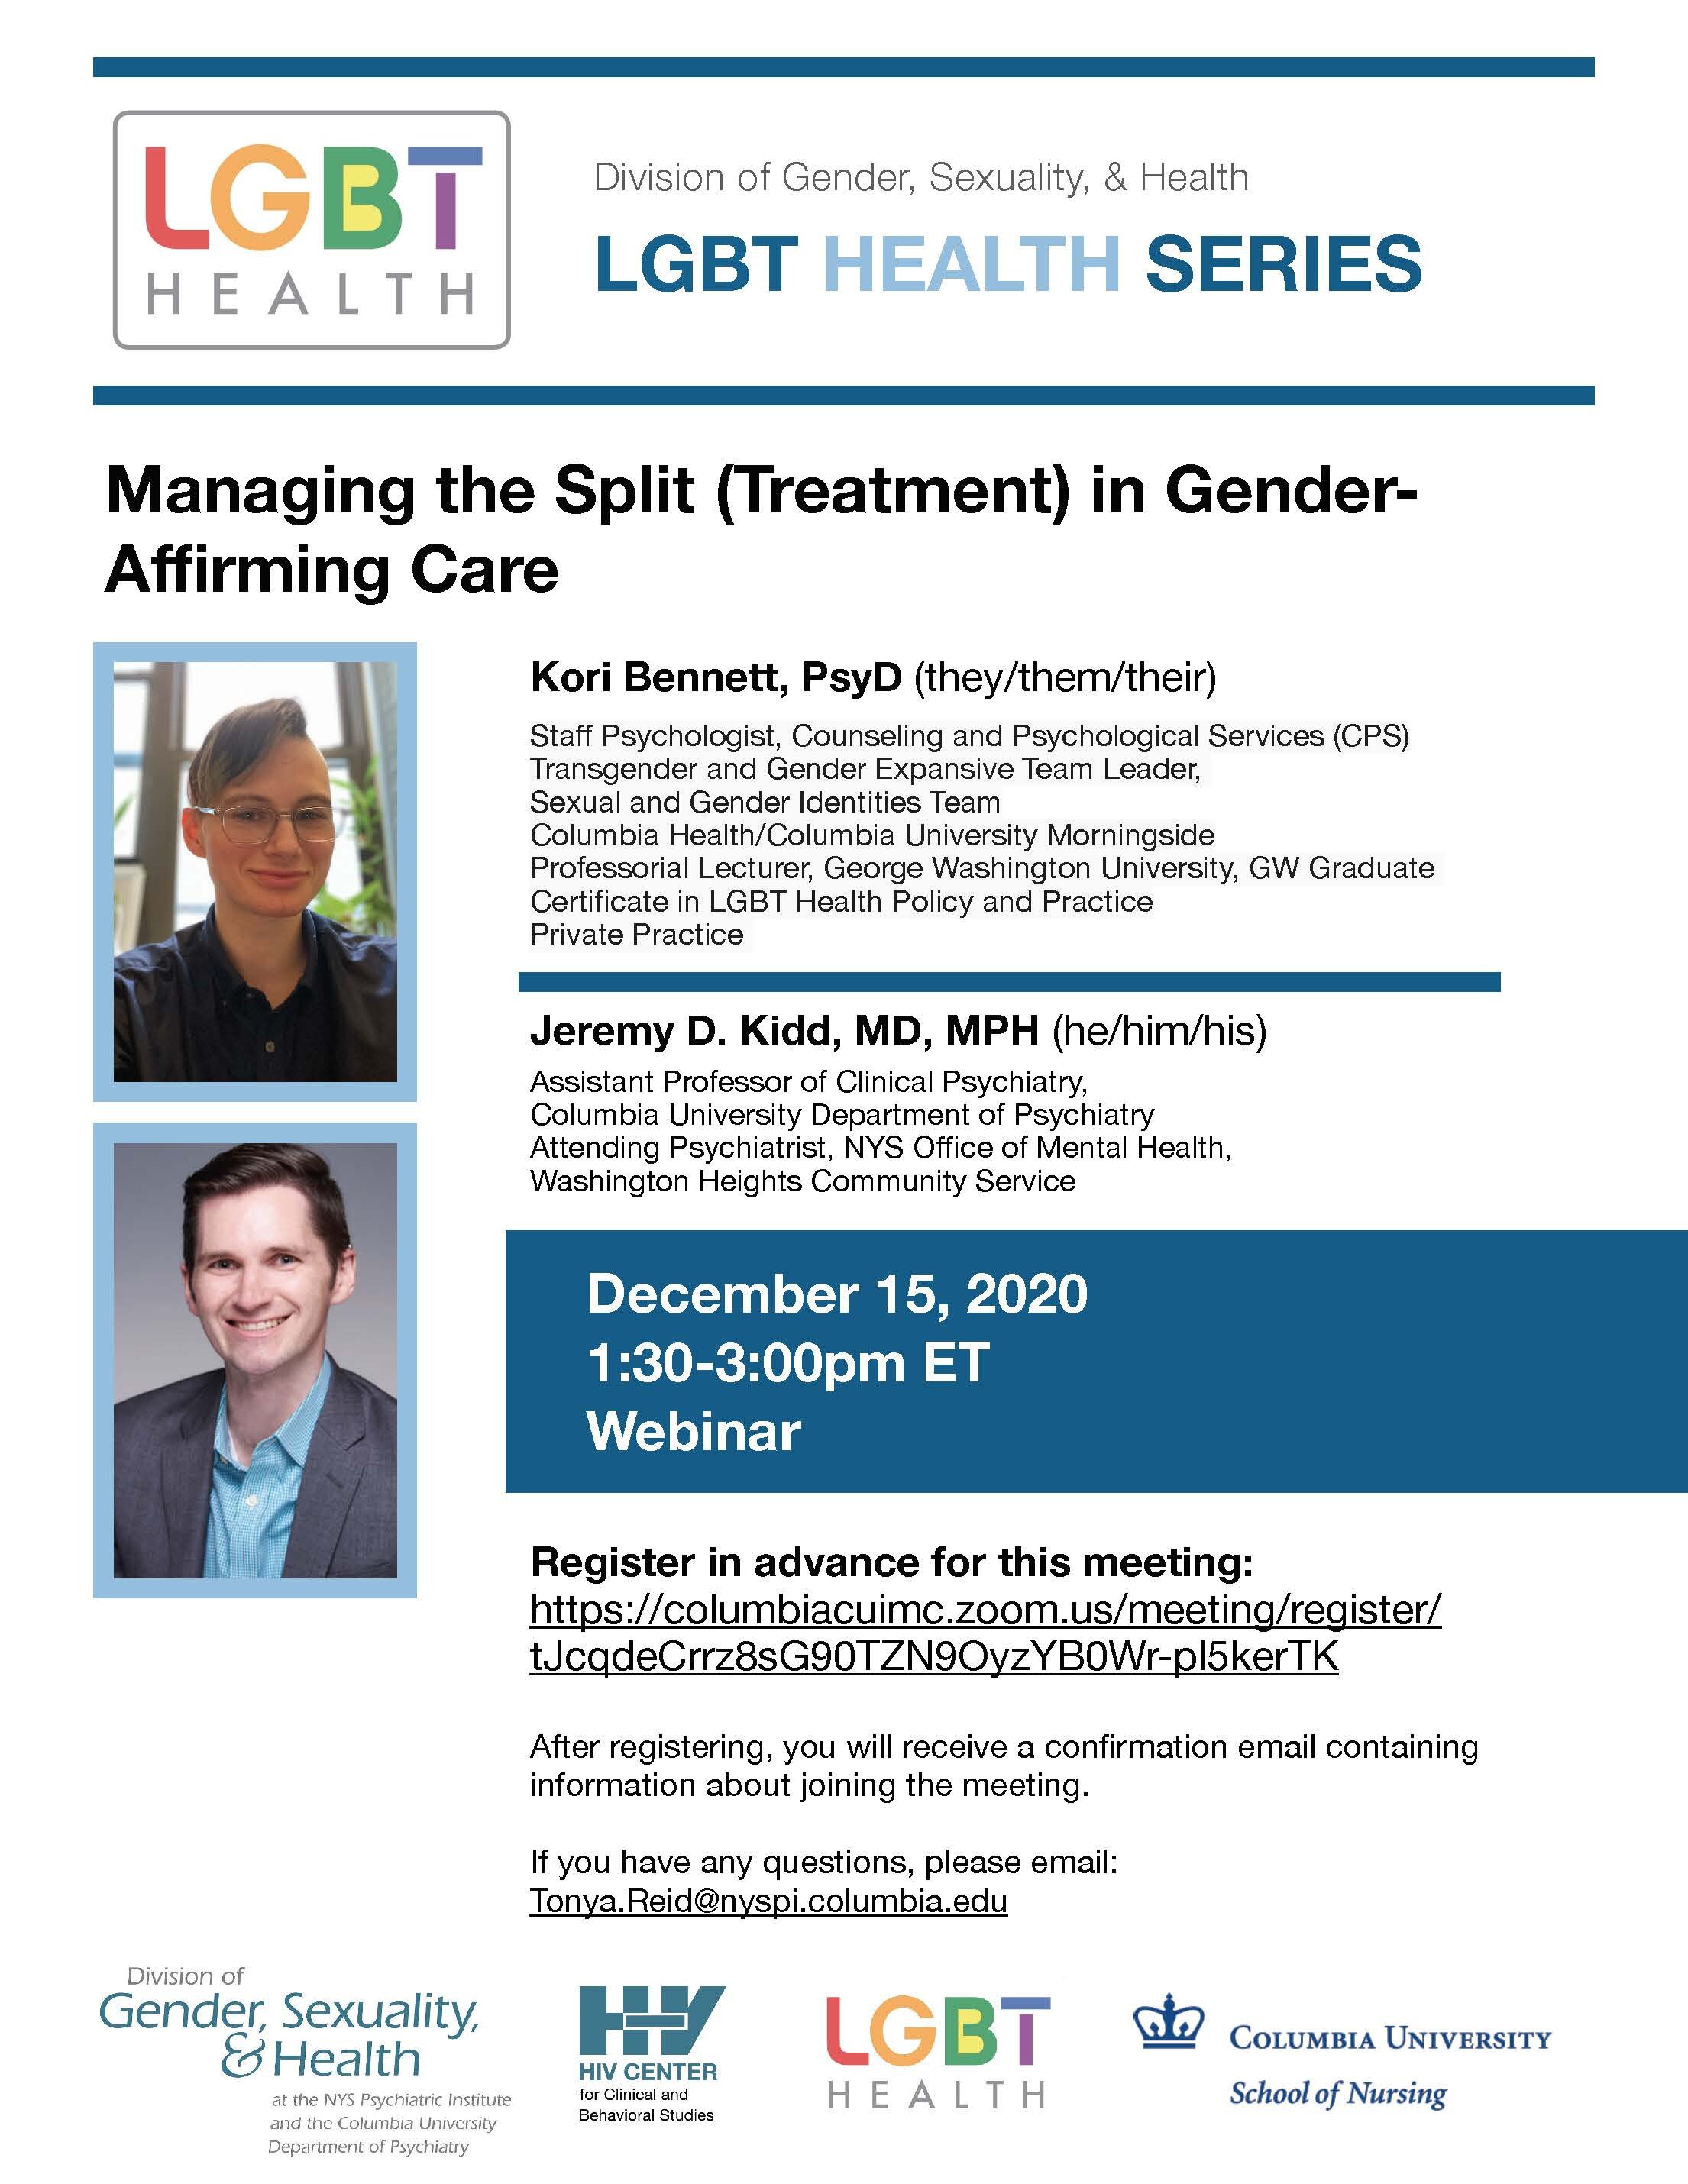 Dec 15 2020 LGBT Health .jpg